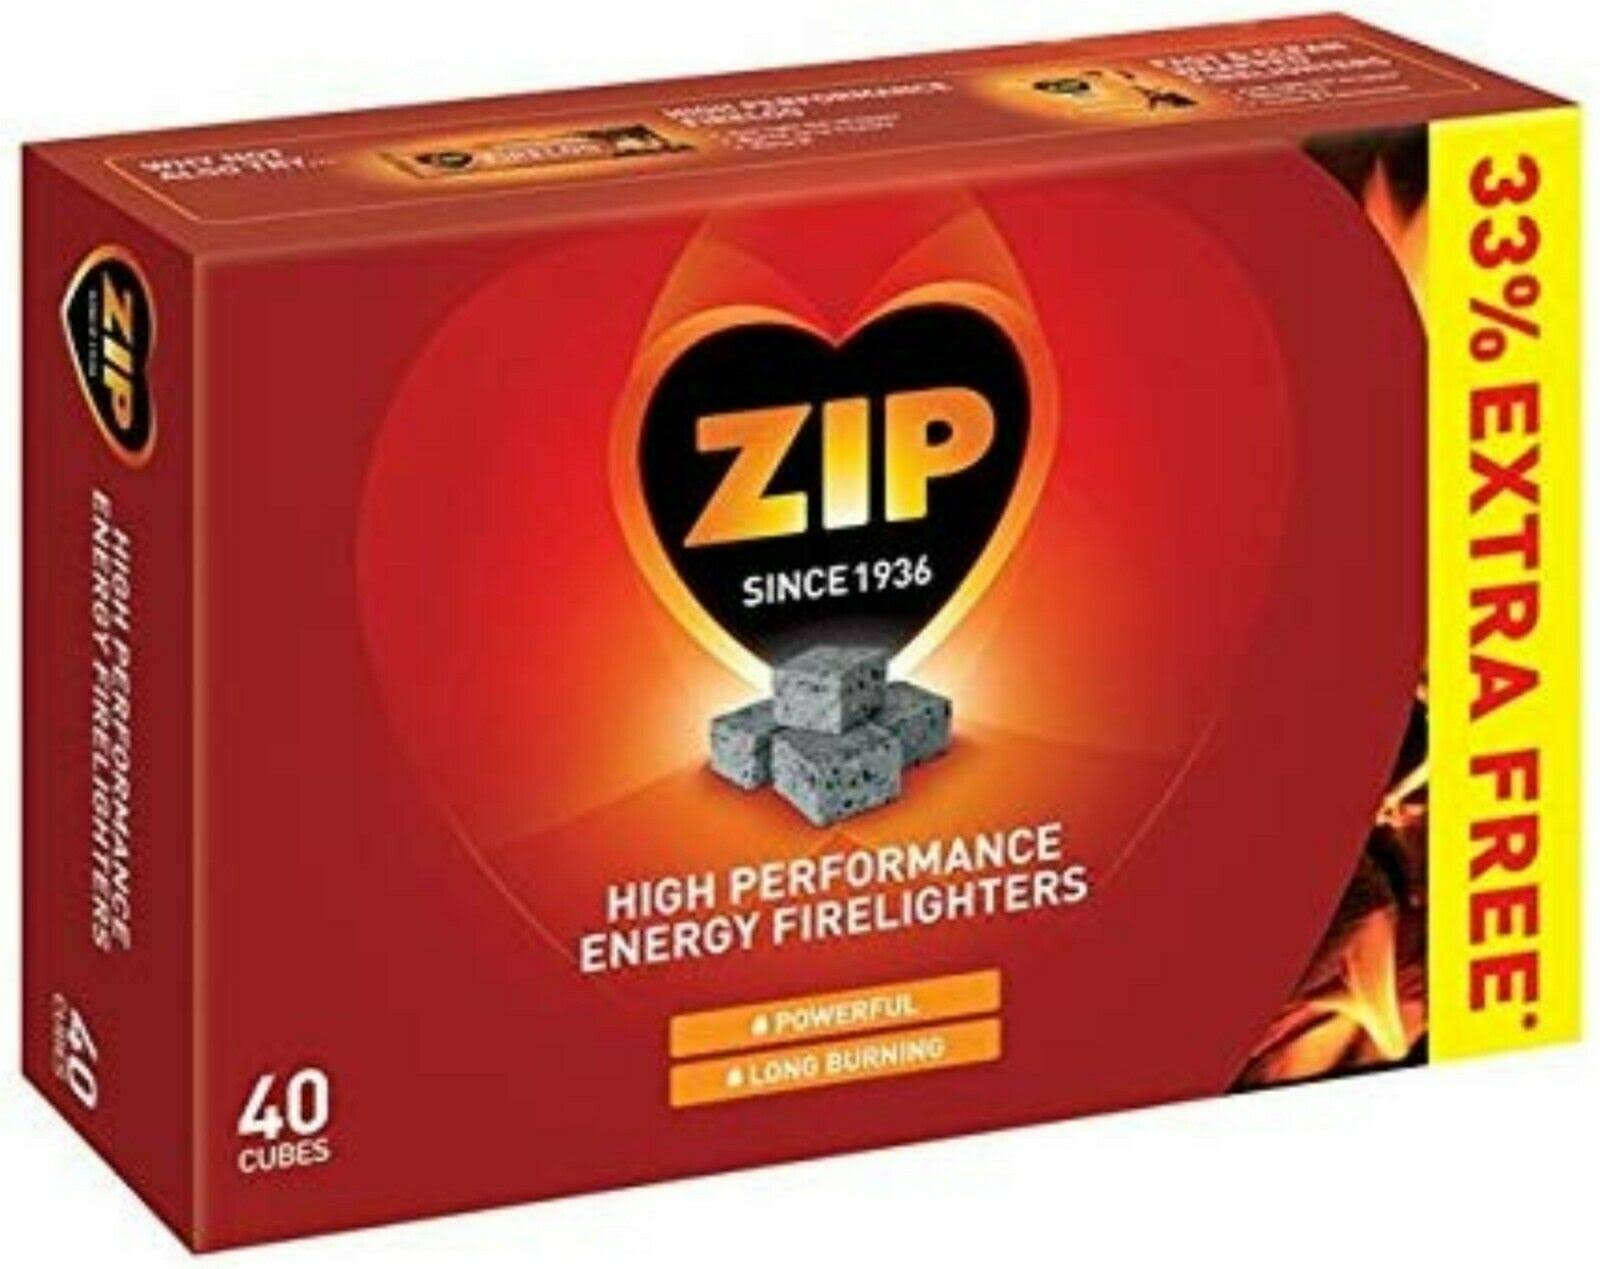 Zip High Performance Energy Firelighters - 40 Cubes